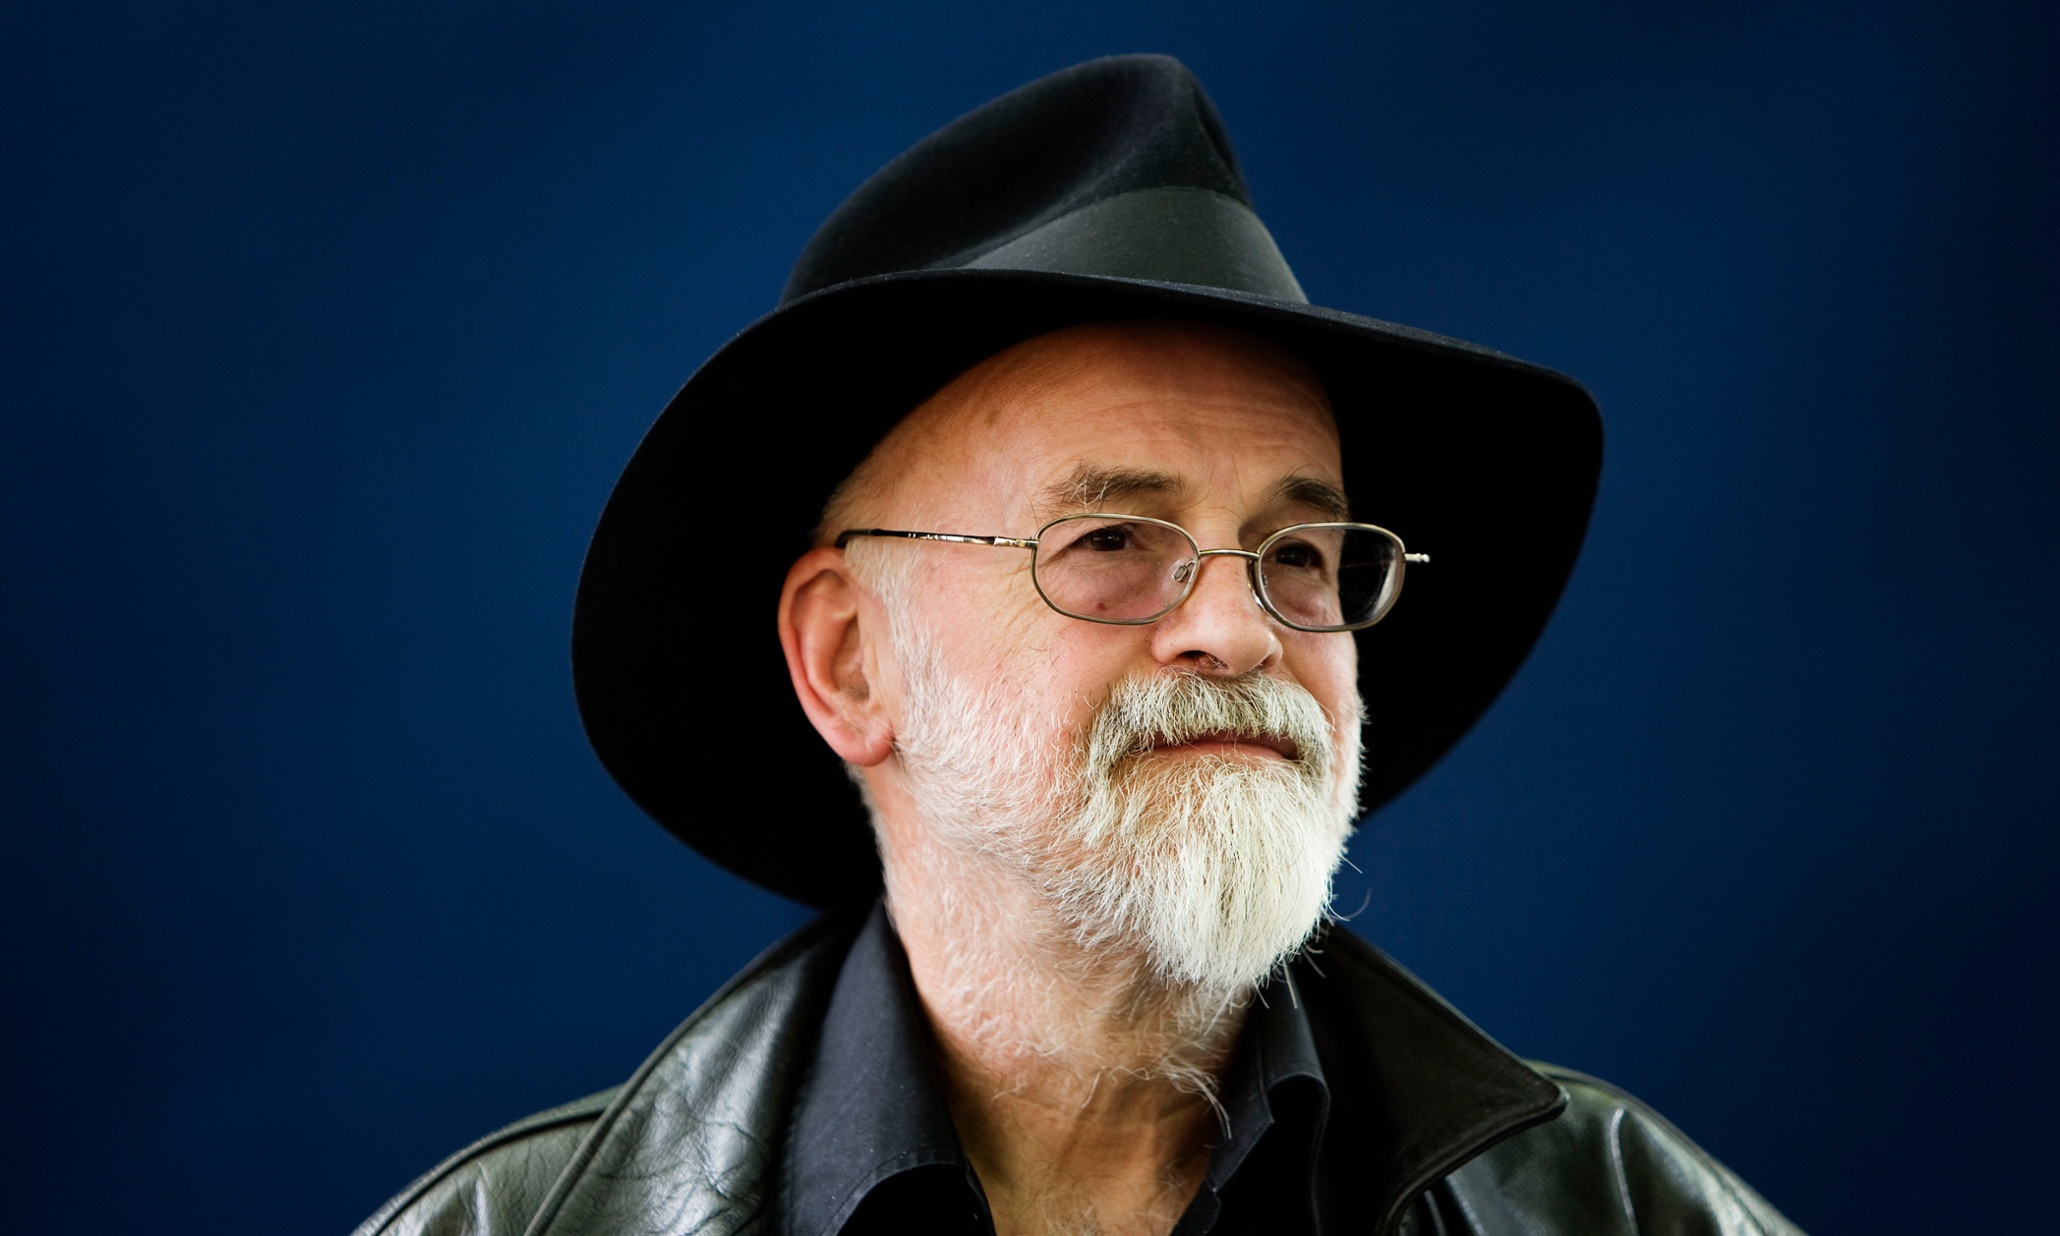 Terry Pratchett, Discworld series author, dies aged 66 | Books | The ...